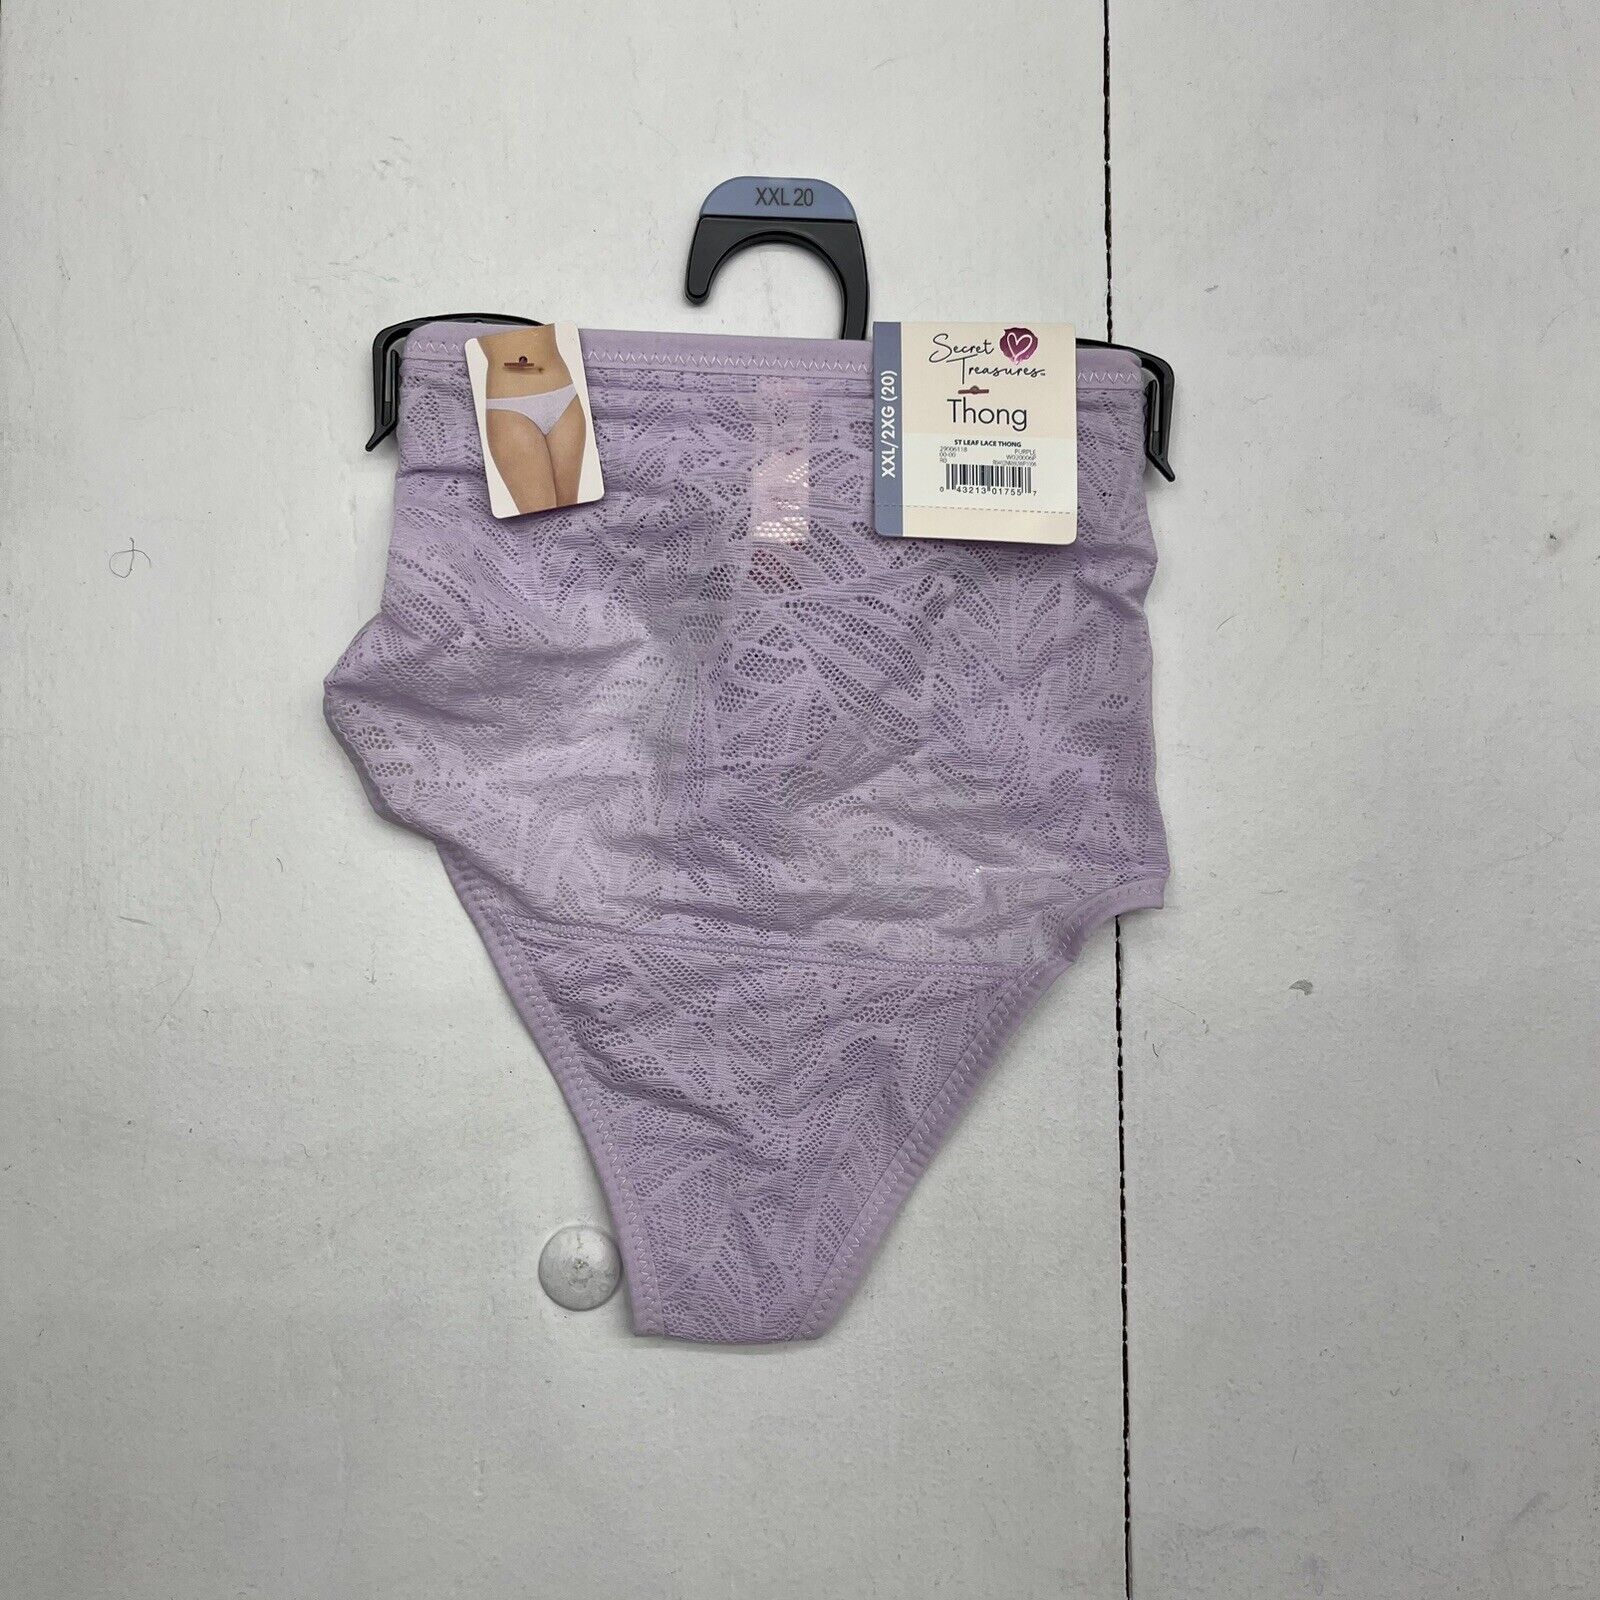 Secret Treasures Purple Lace Leaf Thong Women's Size XXL/2XG(20) NEW -  beyond exchange